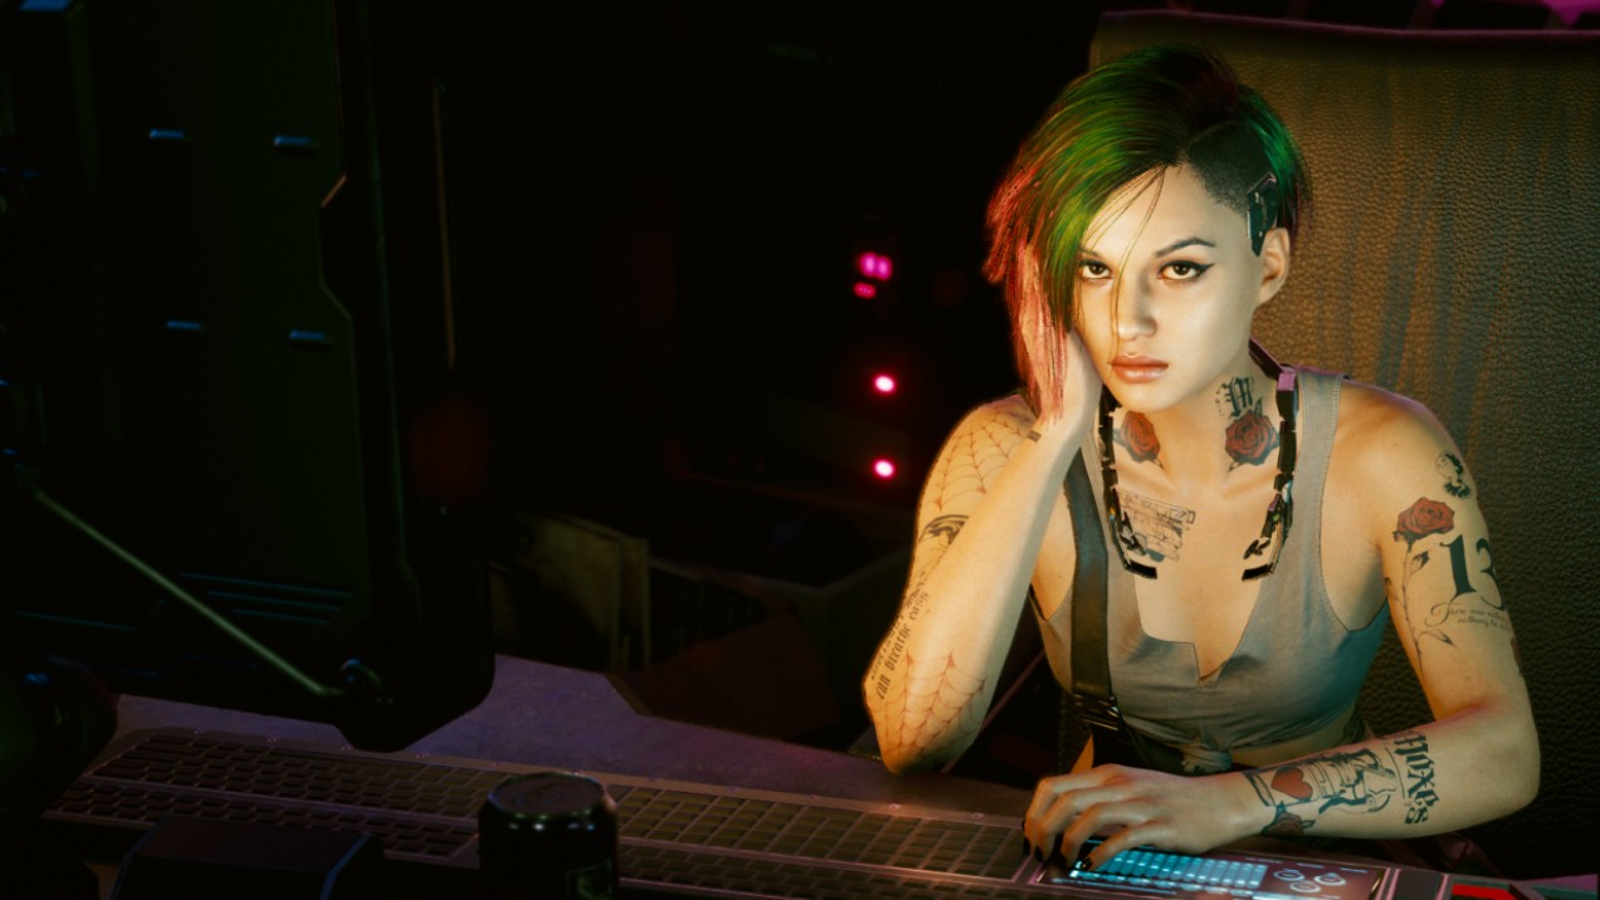 Opinion - Analysis - Eurogamer: Cyberpunk's storytelling makes